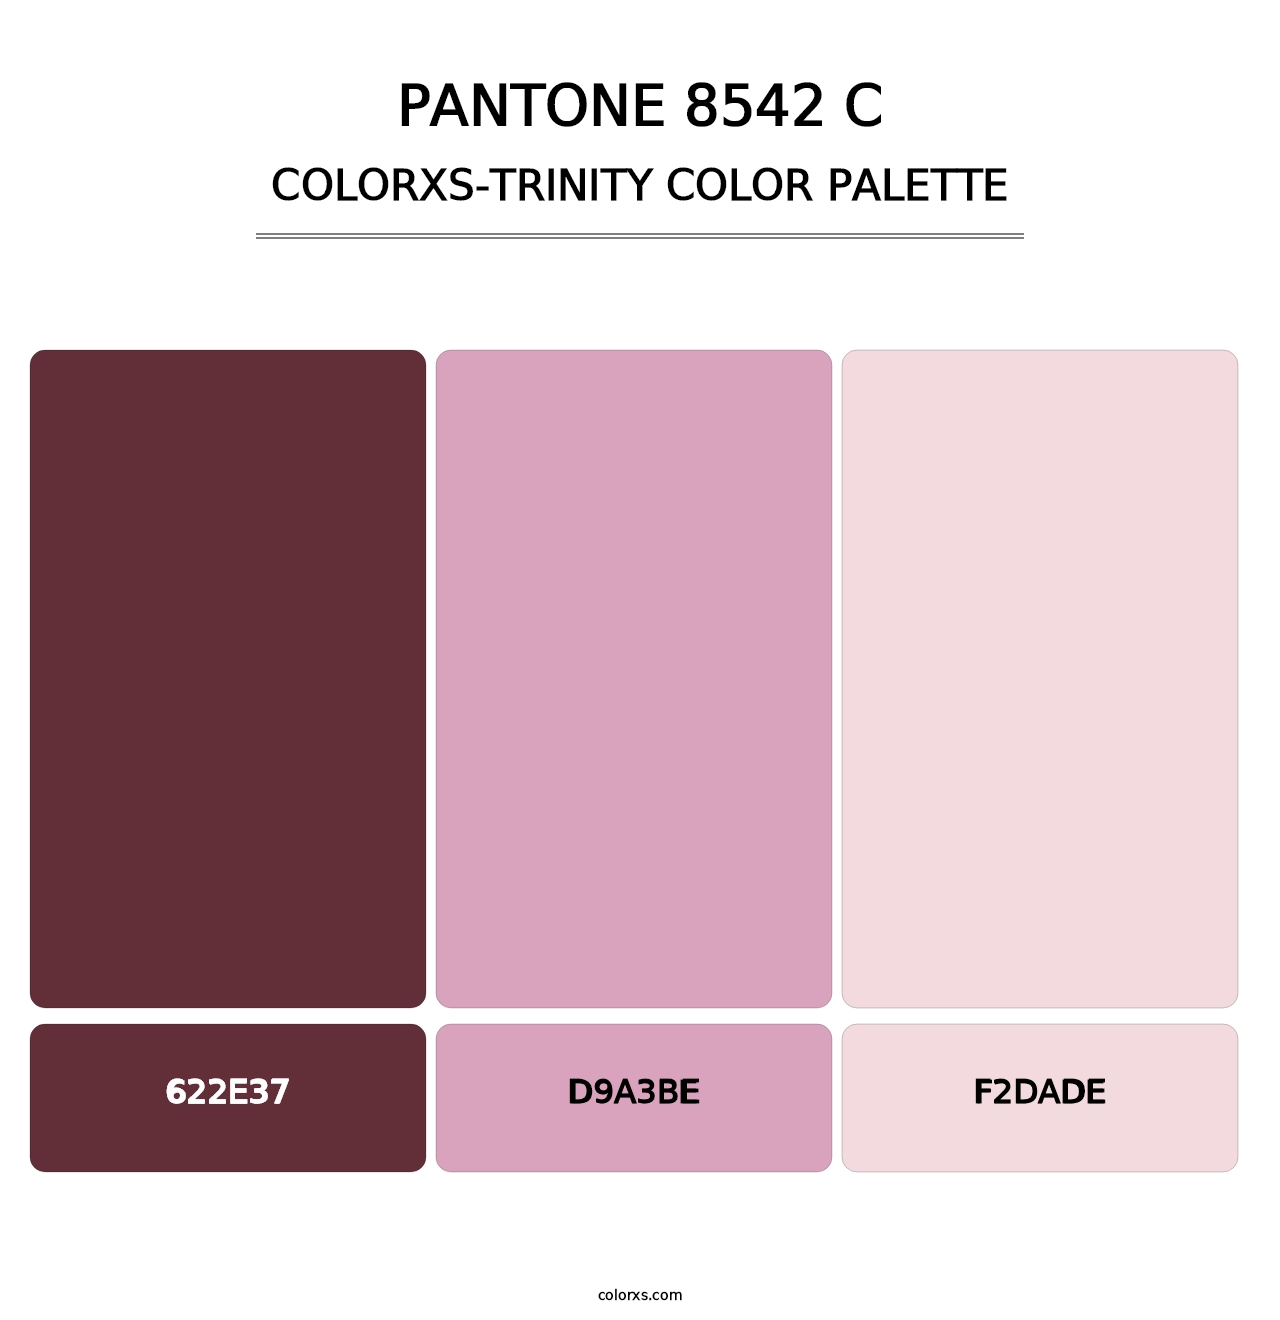 PANTONE 8542 C - Colorxs Trinity Palette